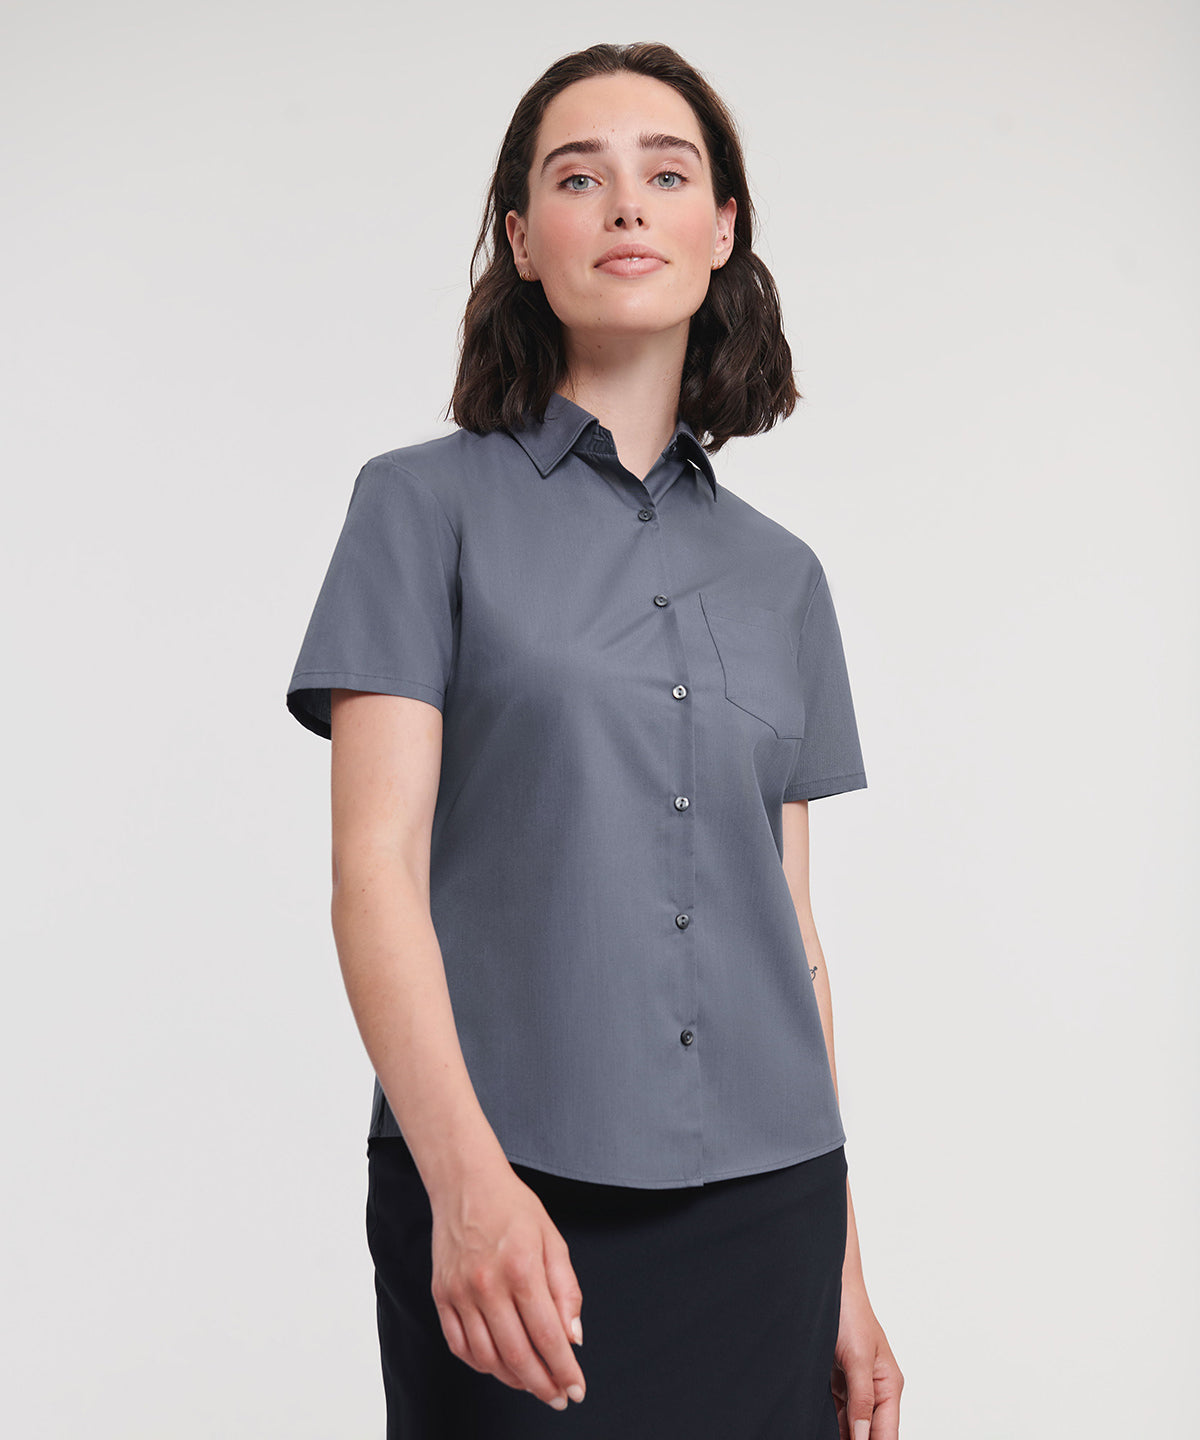 Bolir - Women's Short Sleeve Polycotton Easycare Poplin Shirt